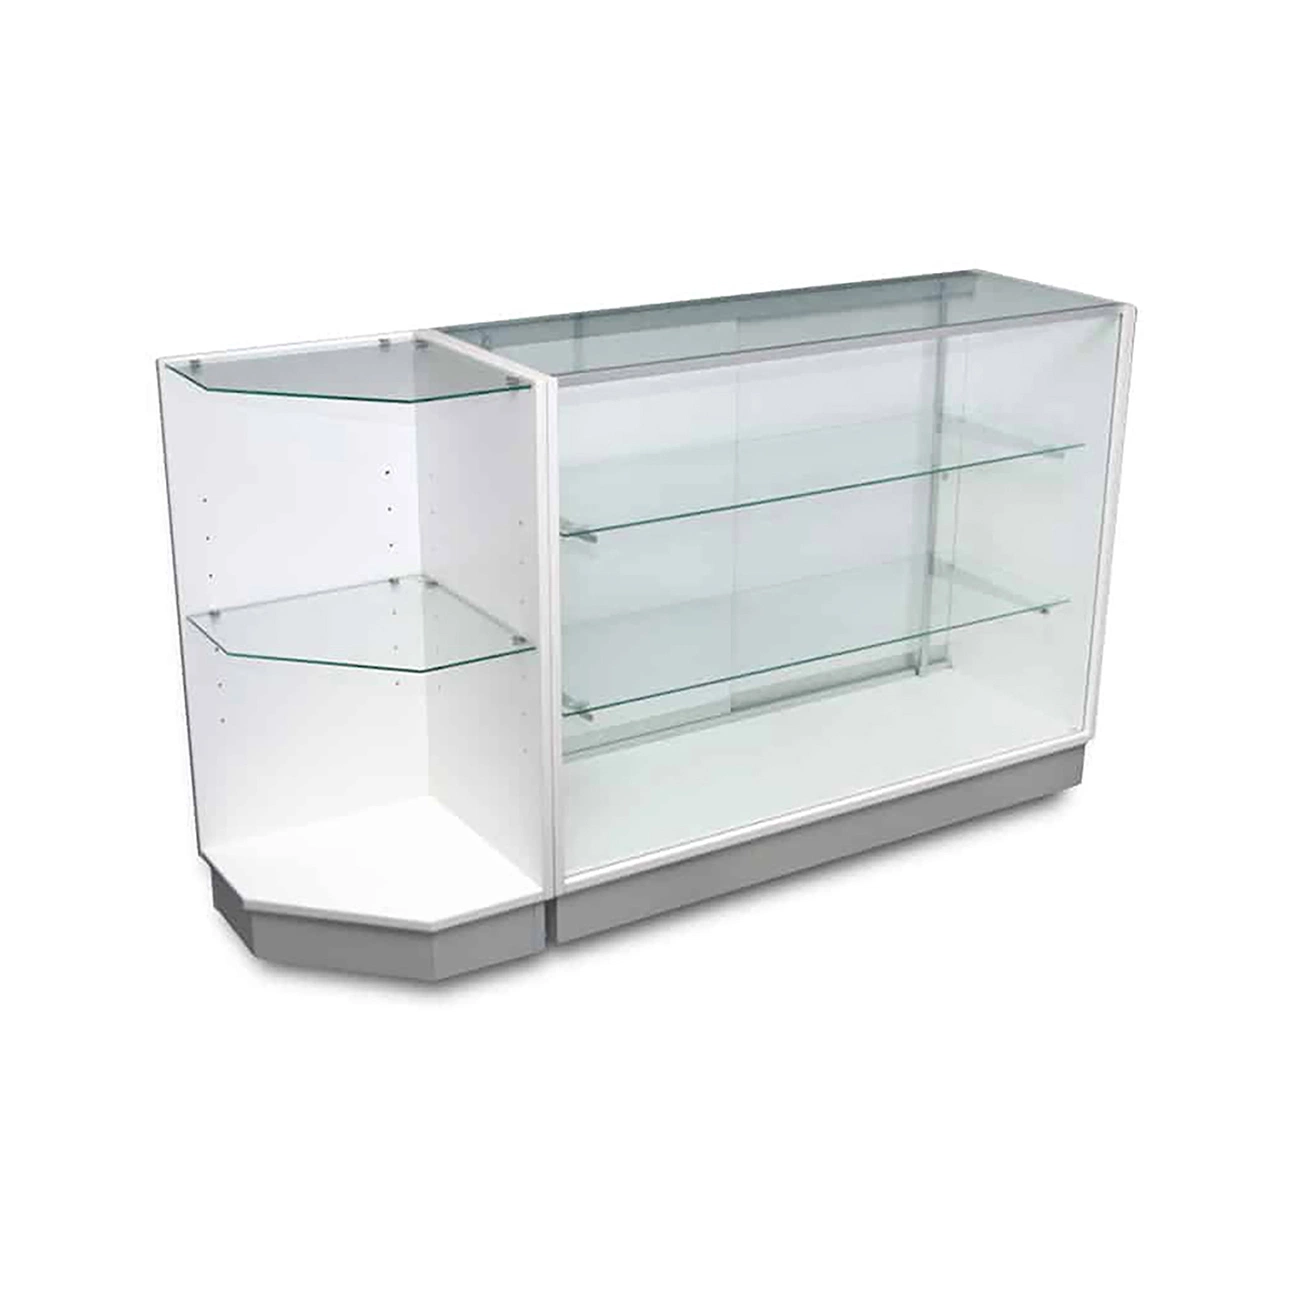 Sturdy Glass Display Showcase for Shop